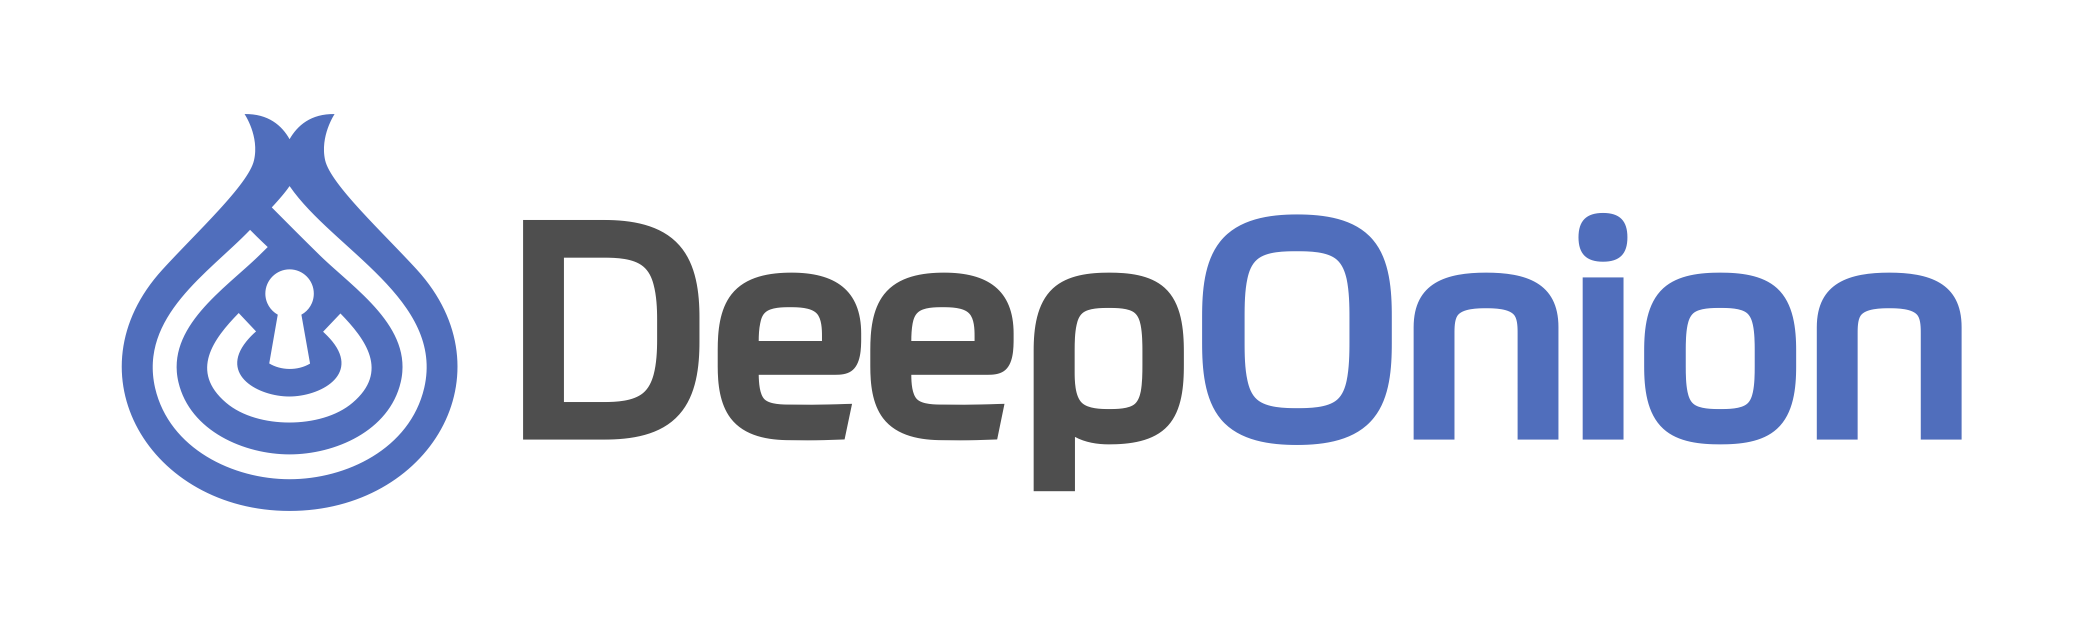 DeepOnion-Main-Logo.png